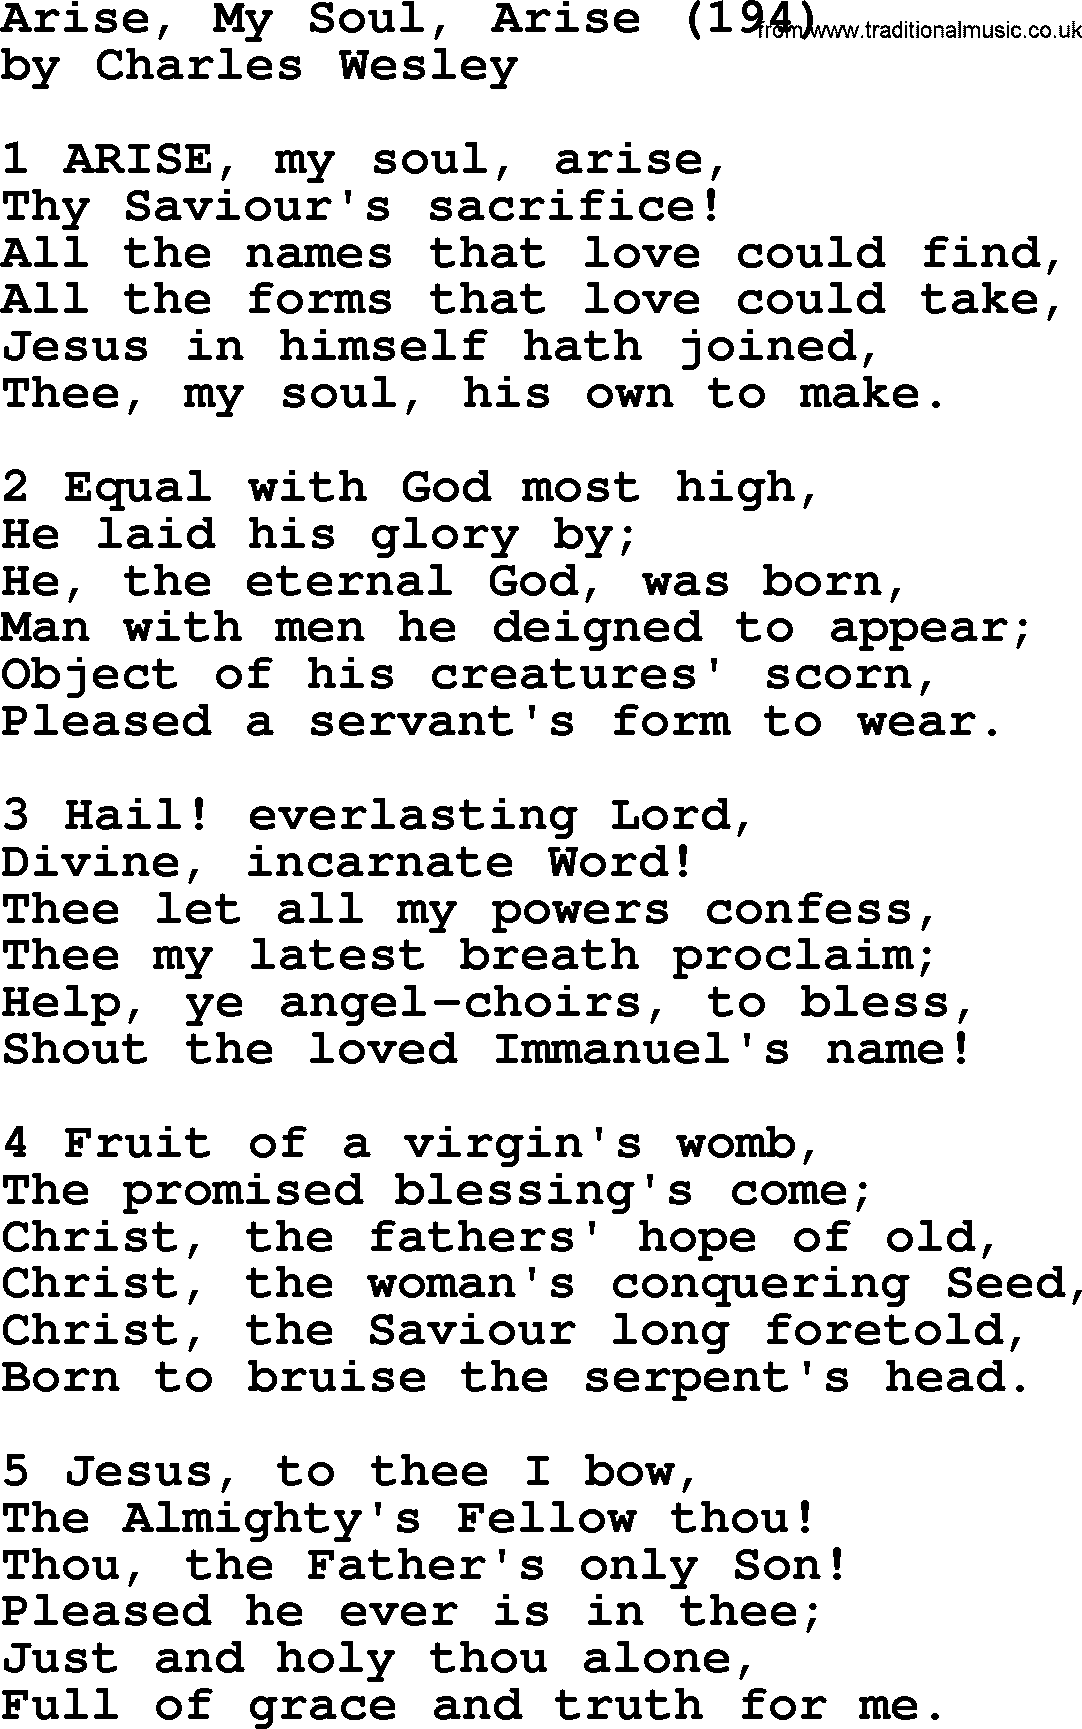 Charles Wesley hymn: Arise, My Soul, Arise (194), lyrics